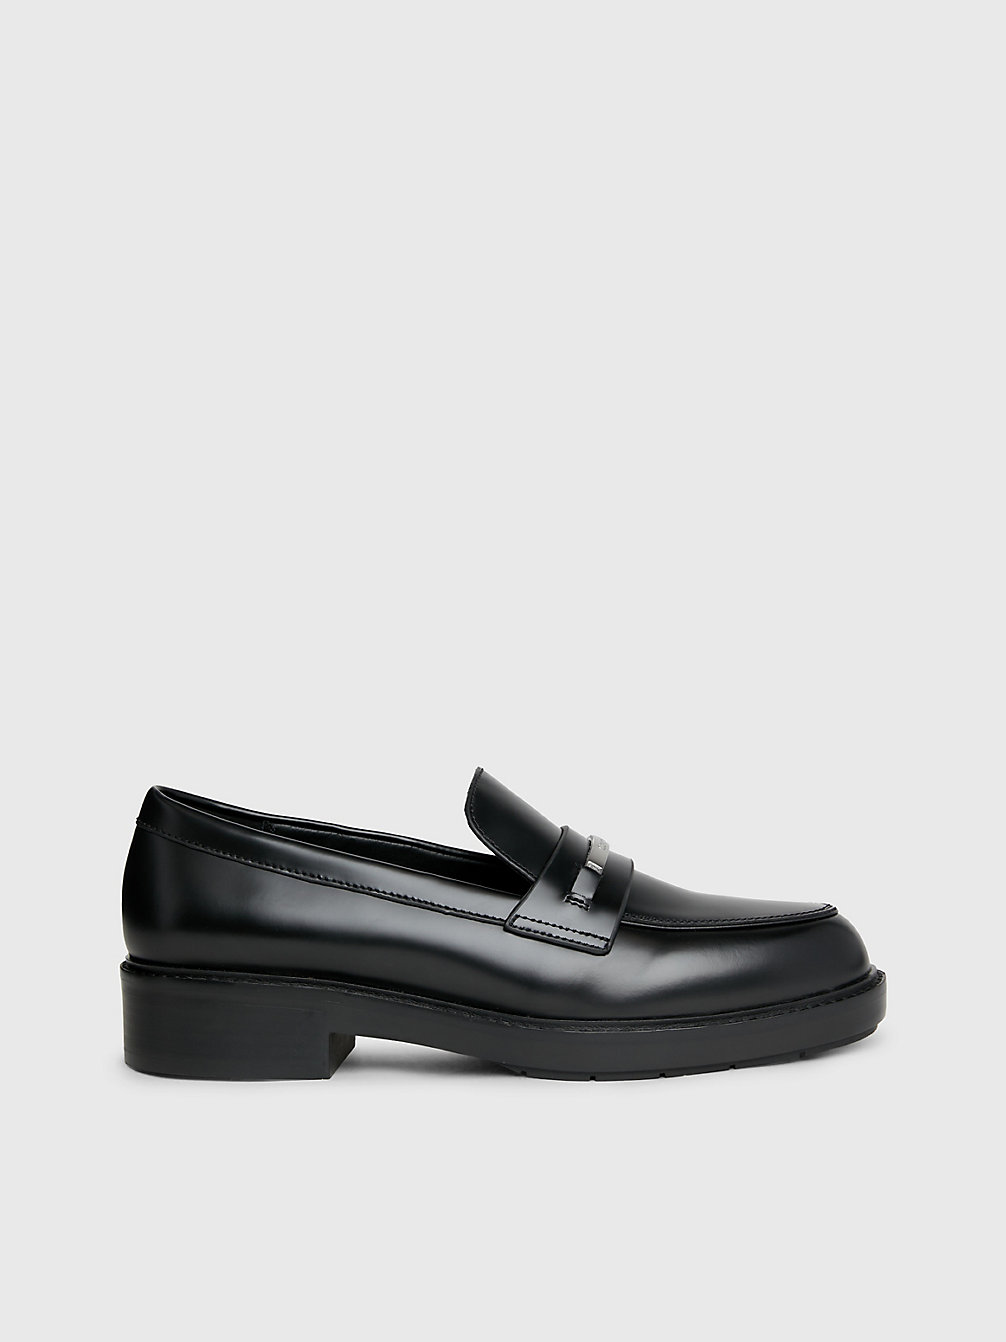 CK BLACK > Leather Loafers > undefined Women - Calvin Klein